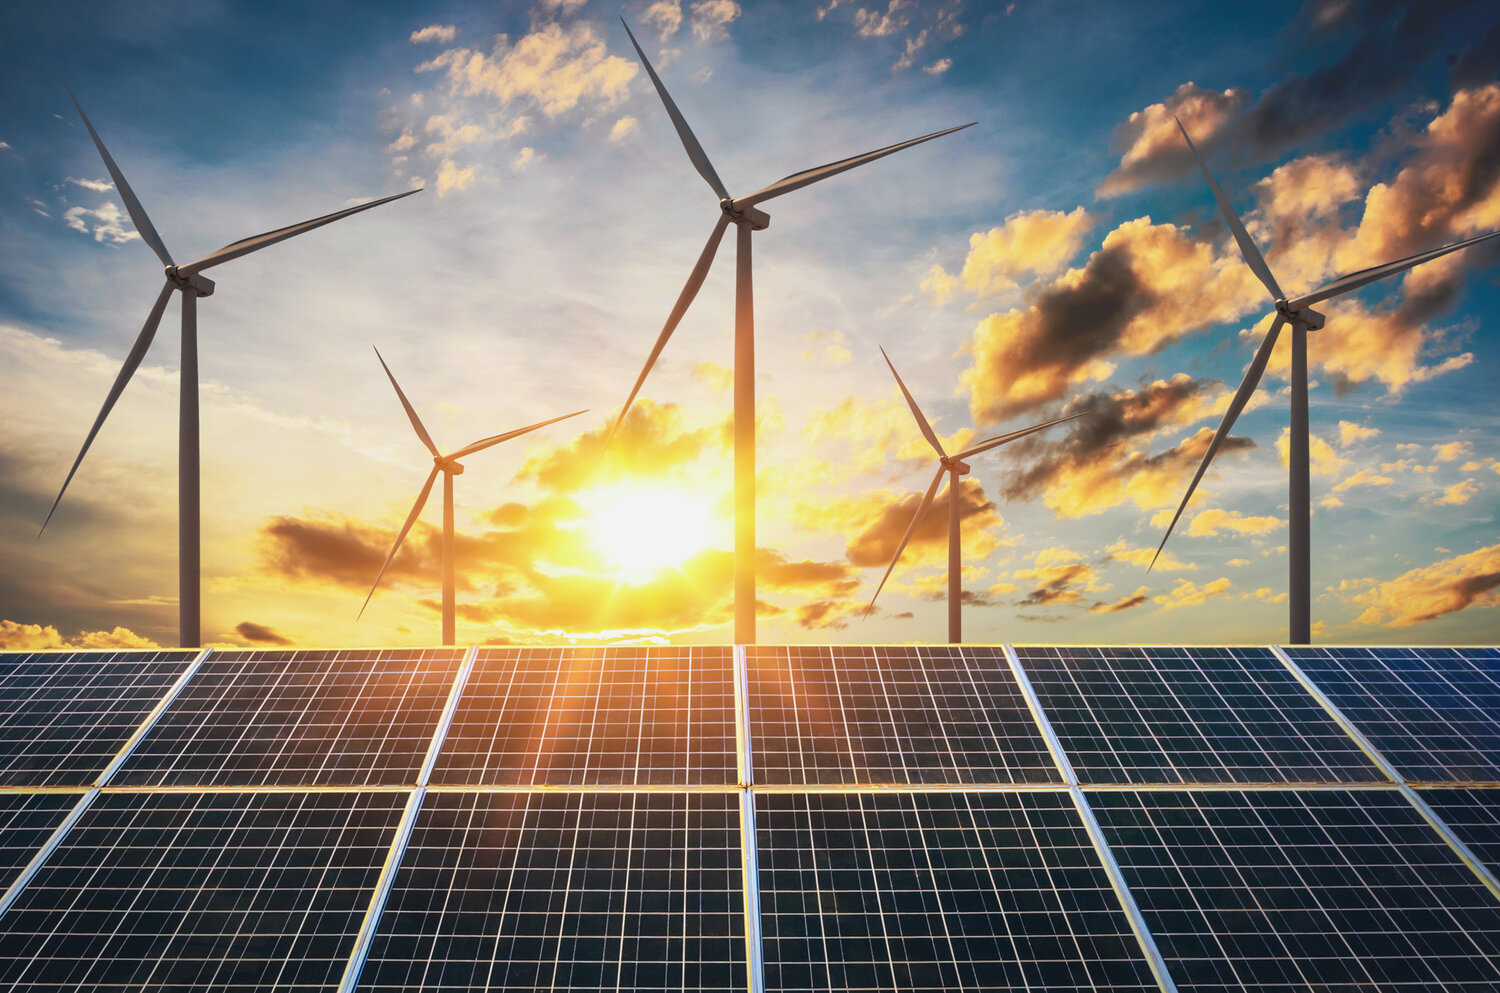 Public Service Company of Oklahoma anticipates October 15 RFP launch  seeking 2.6 GW of wind, 1.35 GW of solar — New Project Media